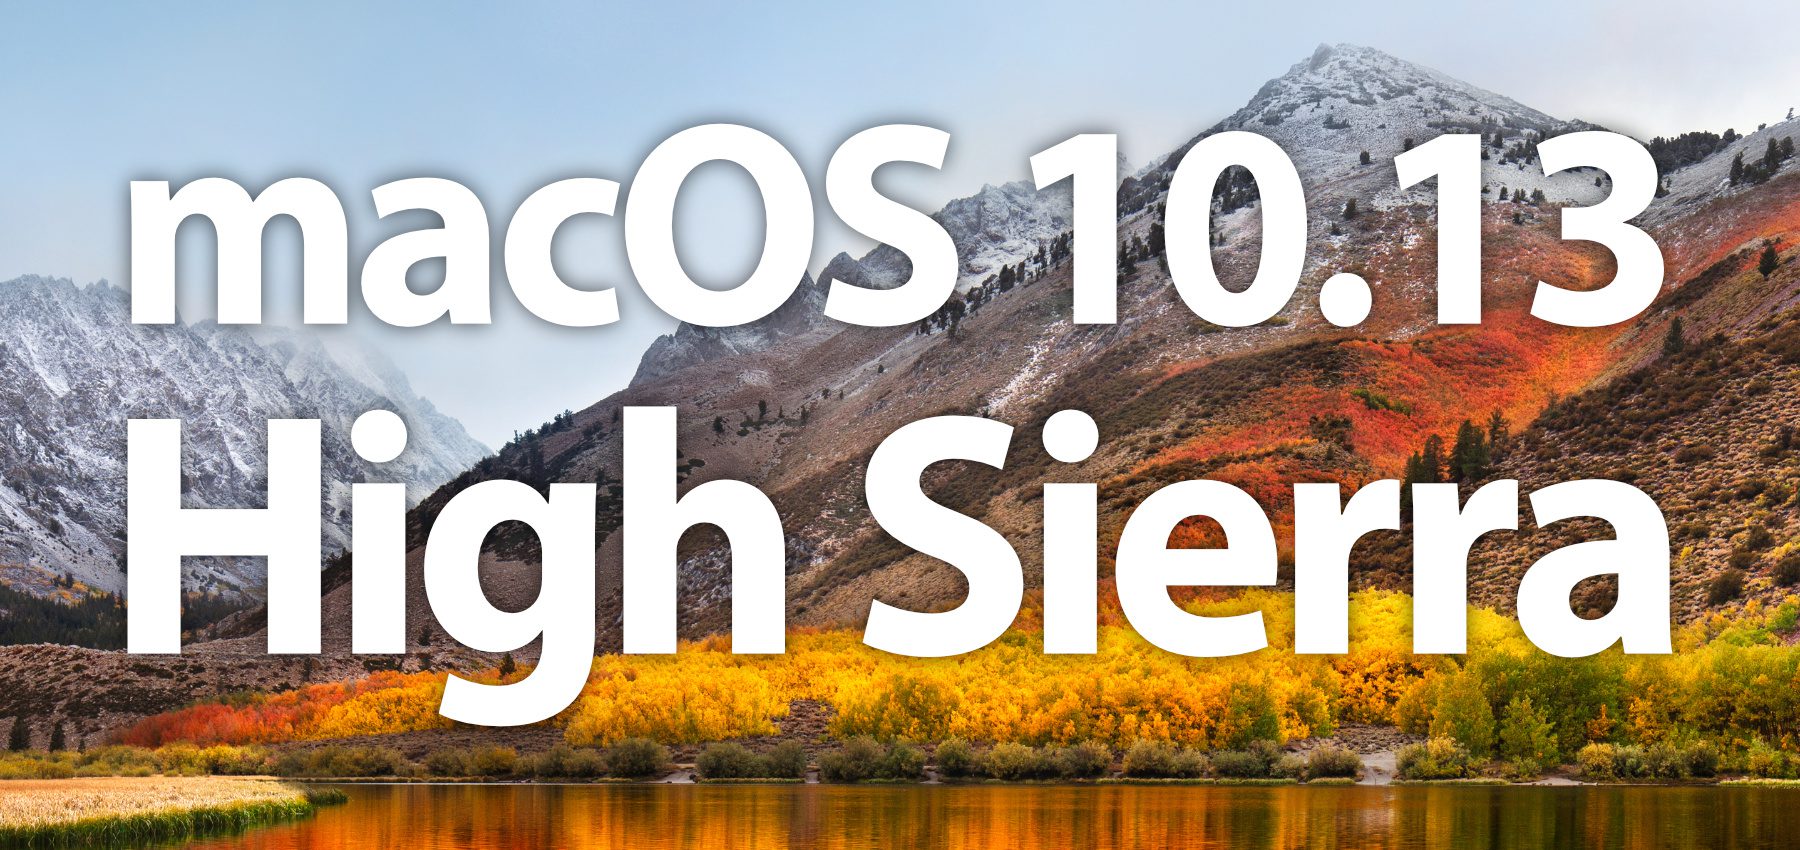 Macos 10.13 high sierra. Mac os High Sierra. Mac os 10.13 High Sierra.